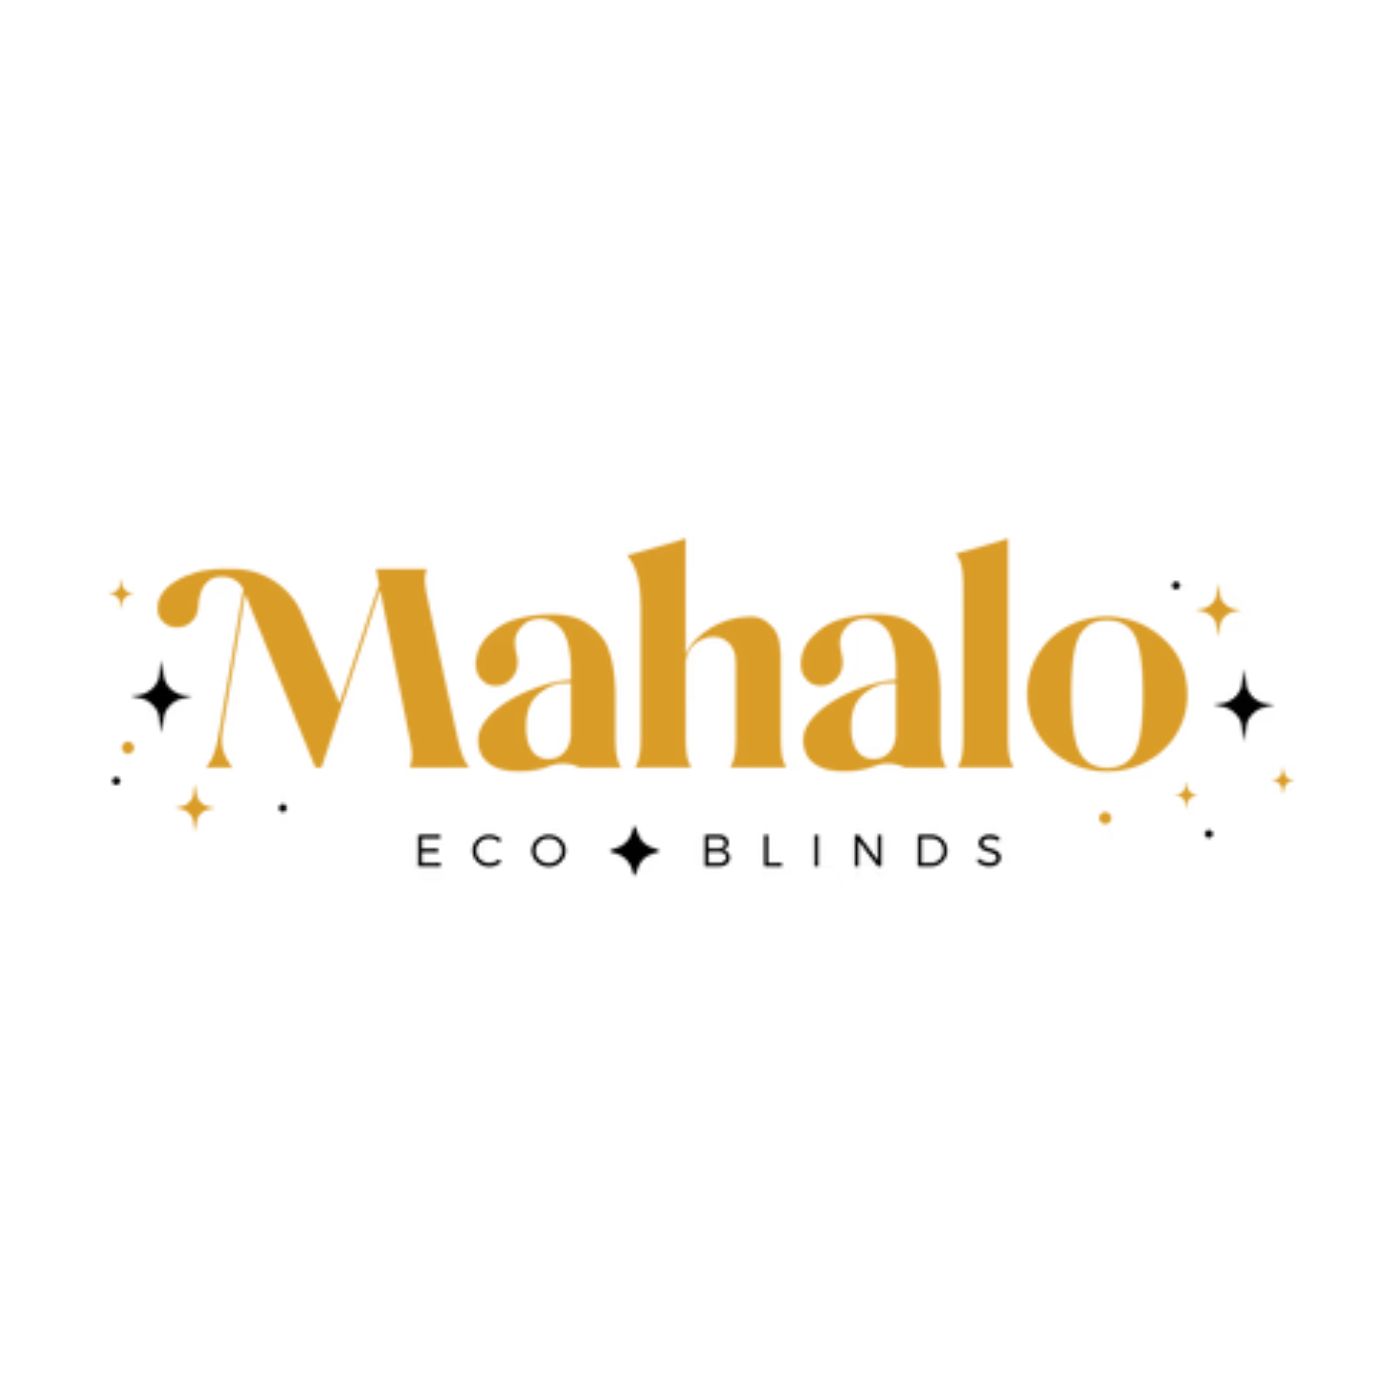 Mahalo Eco Blinds